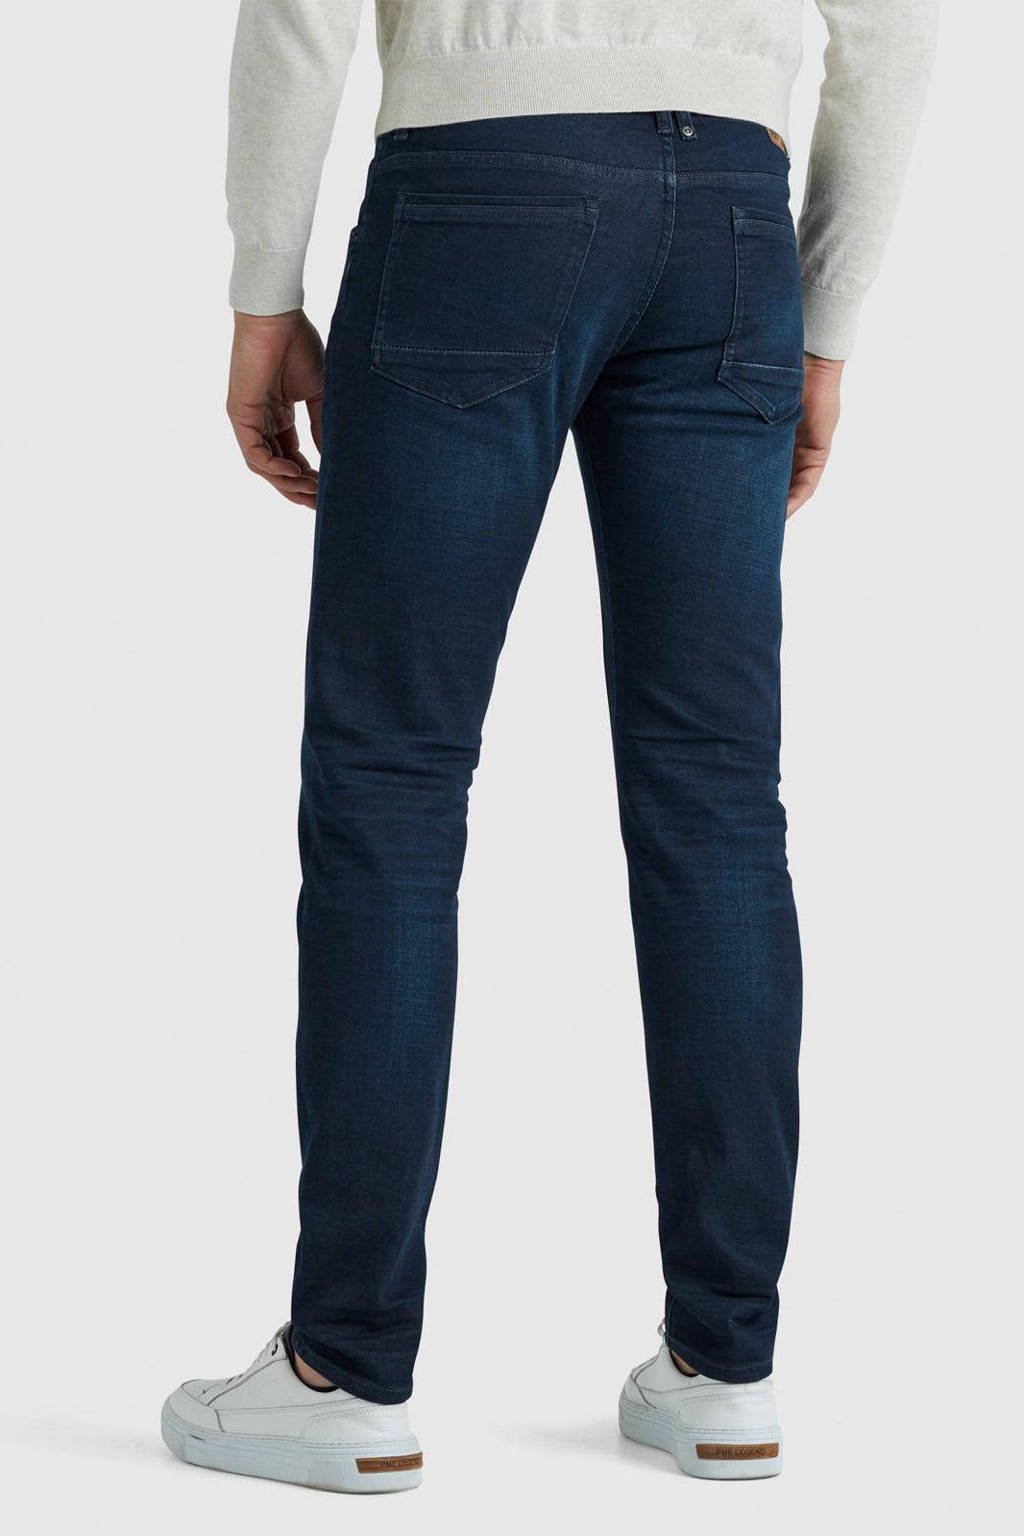 PME Legend slim fit jeans Tailwheel wehkamp dds 